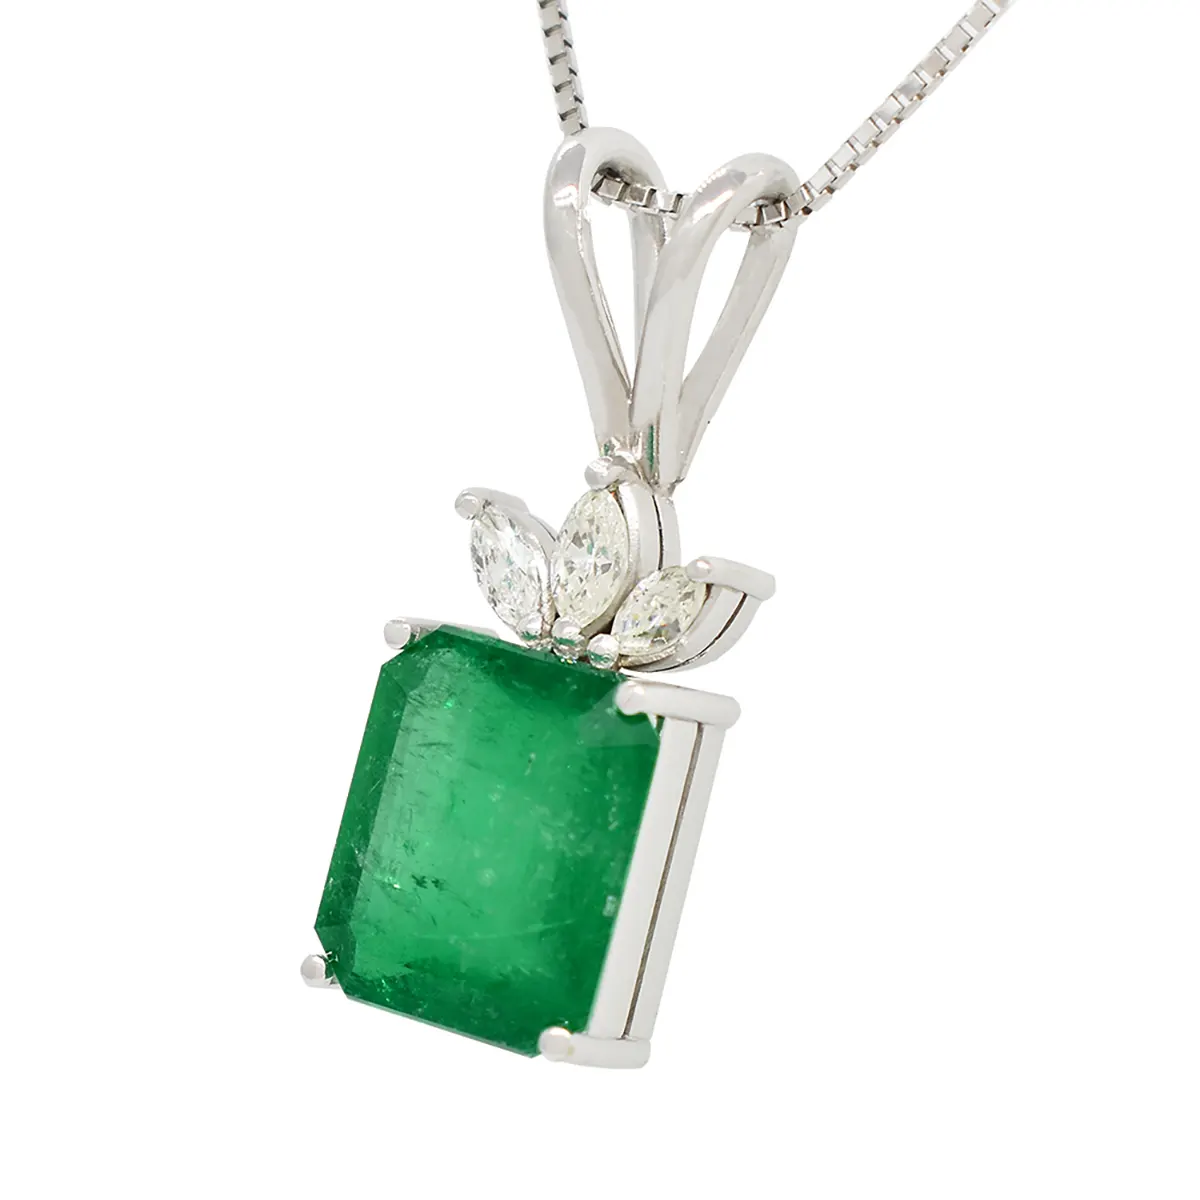 emerald-and-diamond-pendant-in-18k-white-gold-with-emerald-cut-emerald-and-marquise-shape-diamonds